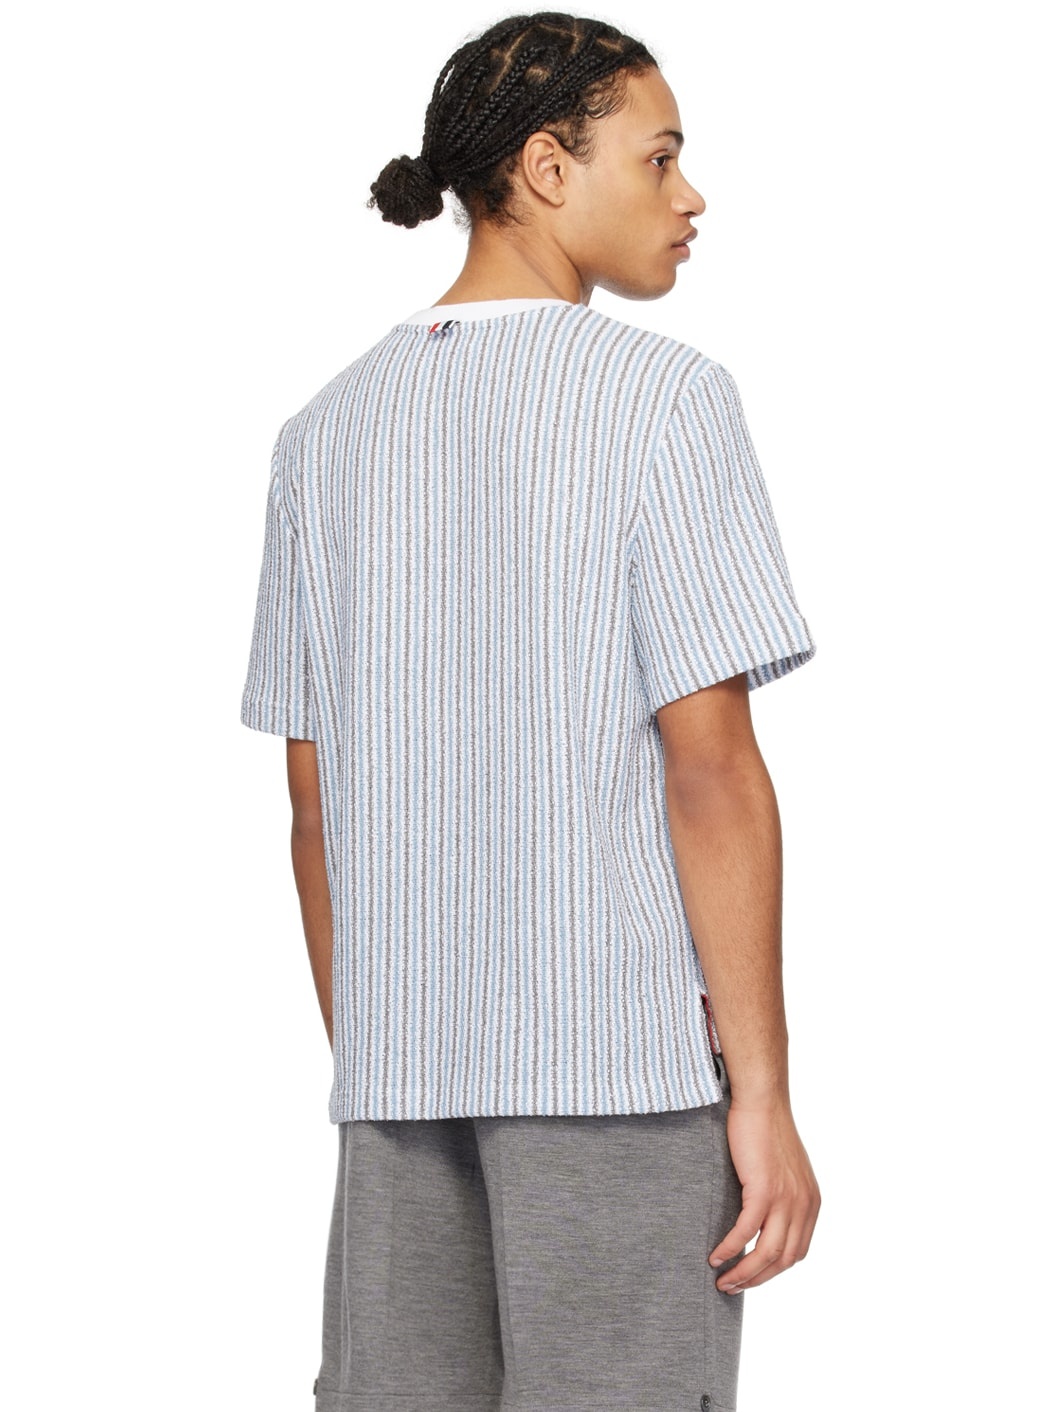 Blue & Gray Striped T-Shirt - 3